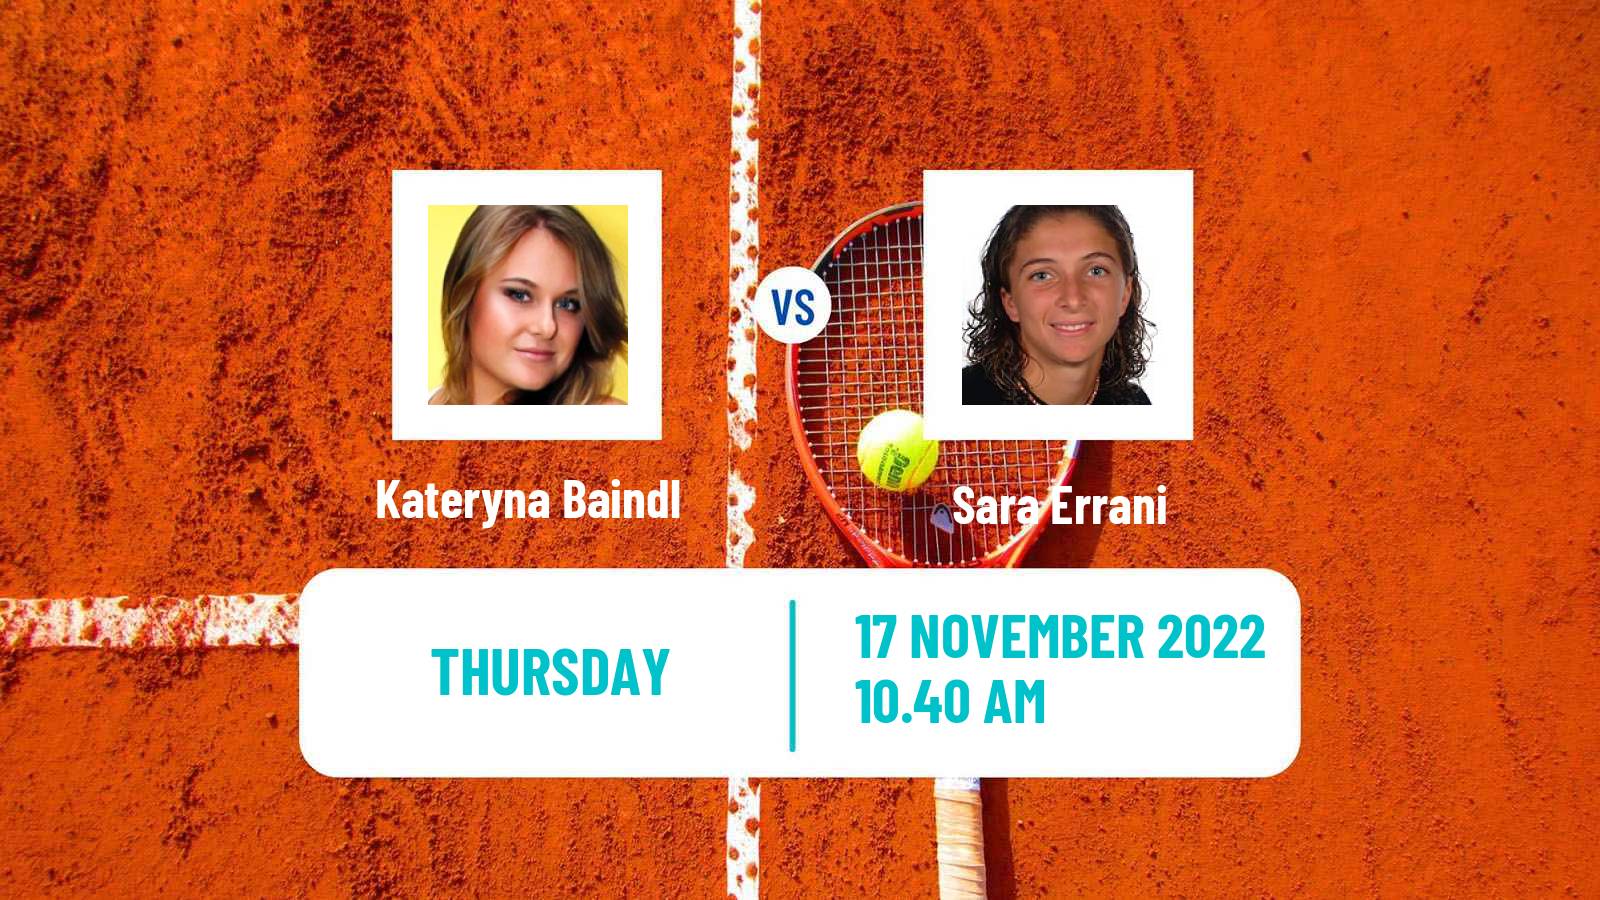 Tennis ATP Challenger Kateryna Baindl - Sara Errani